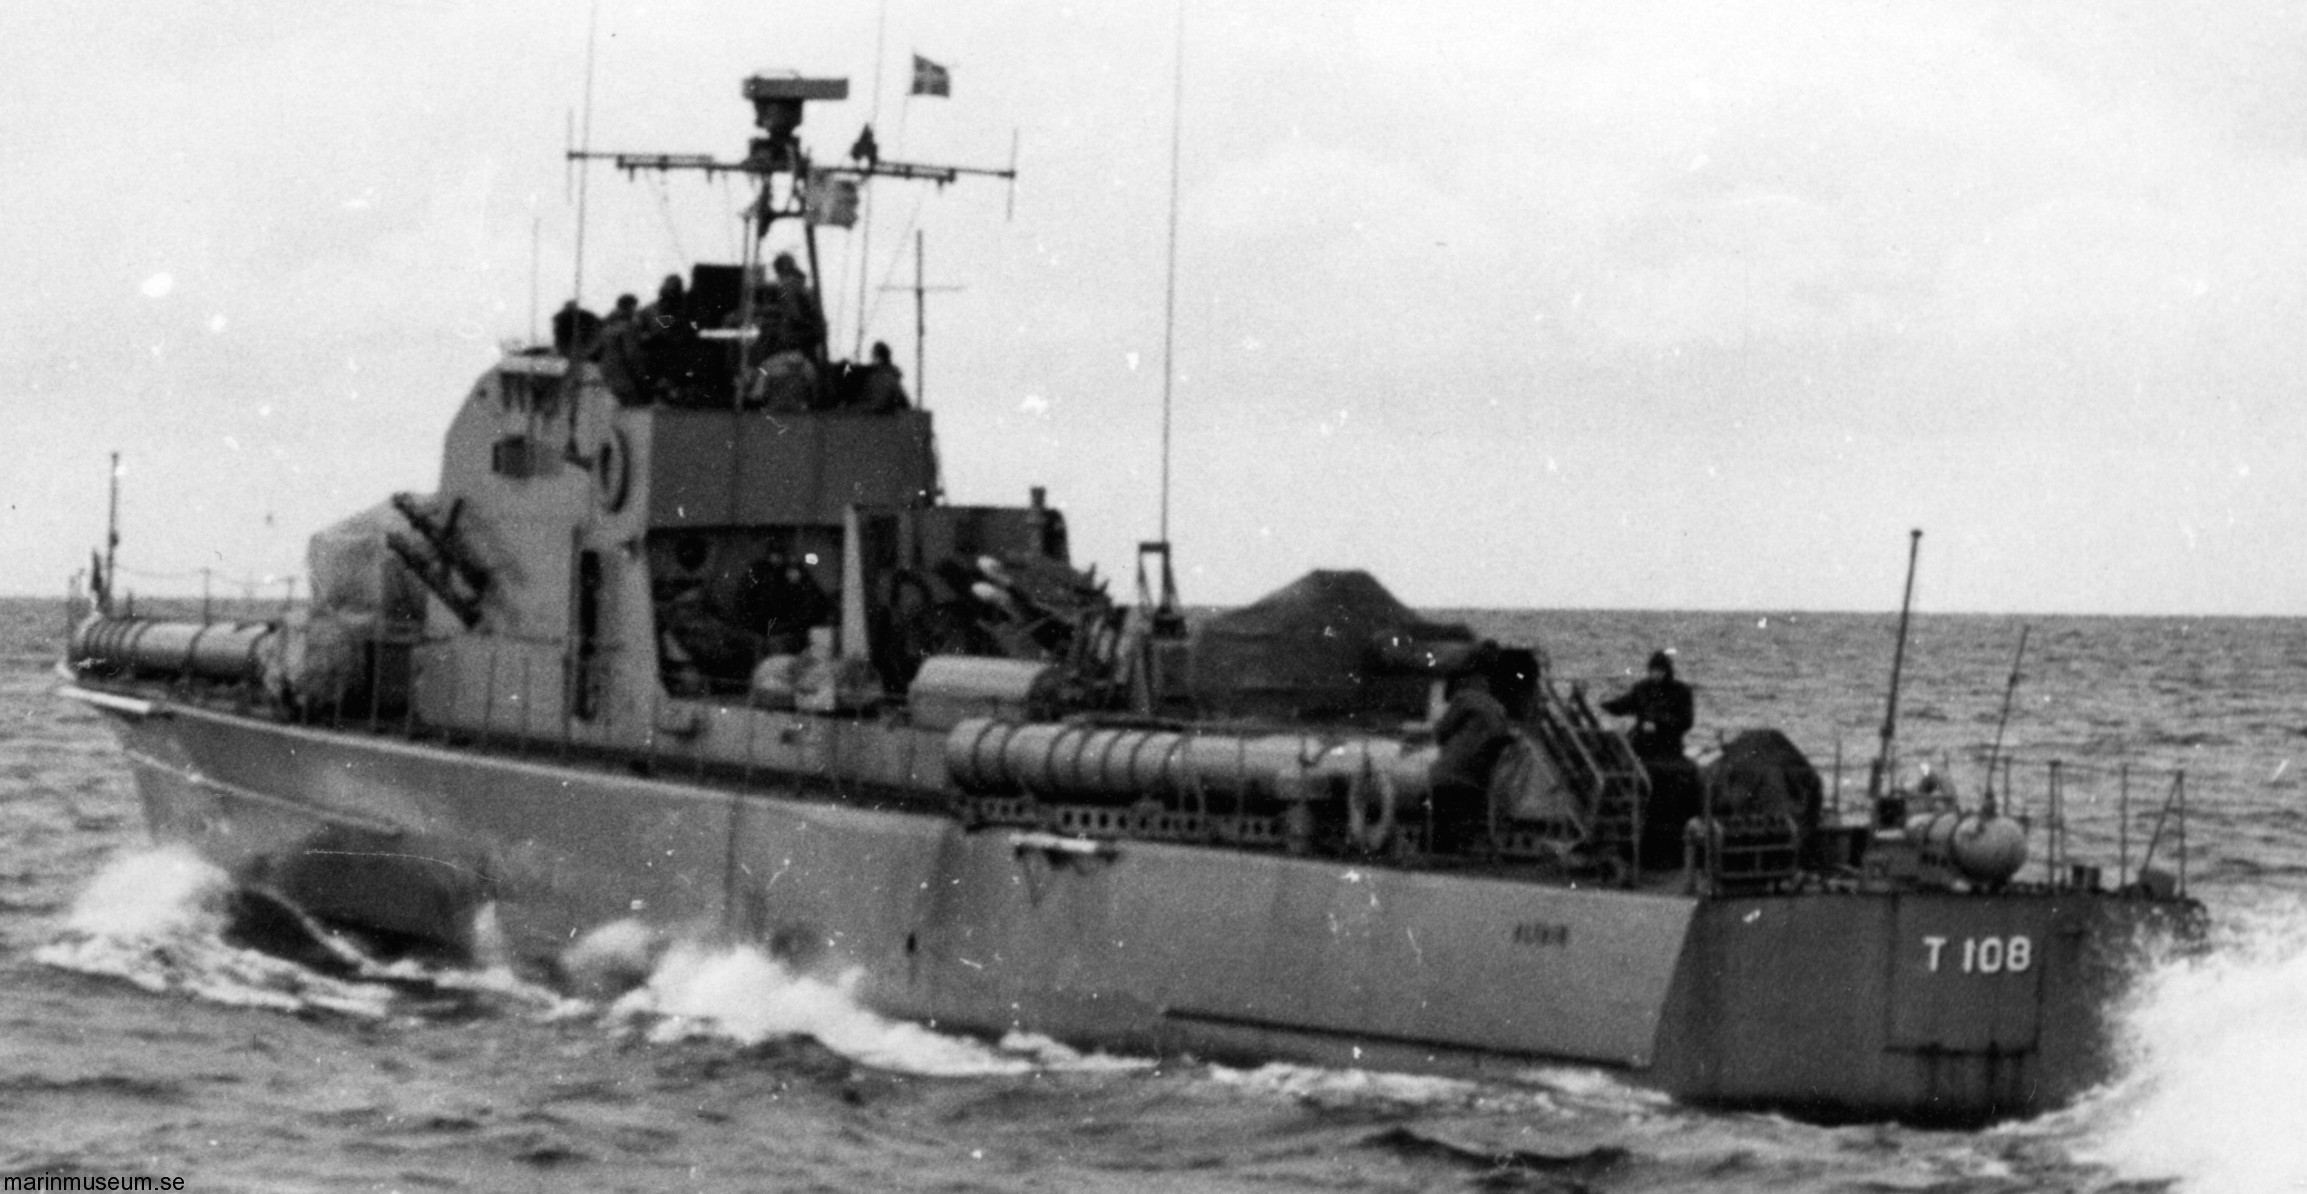 t108 altair hms hswms plejad class fast attack craft torpedo boat vessel swedish navy svenska marinen 03